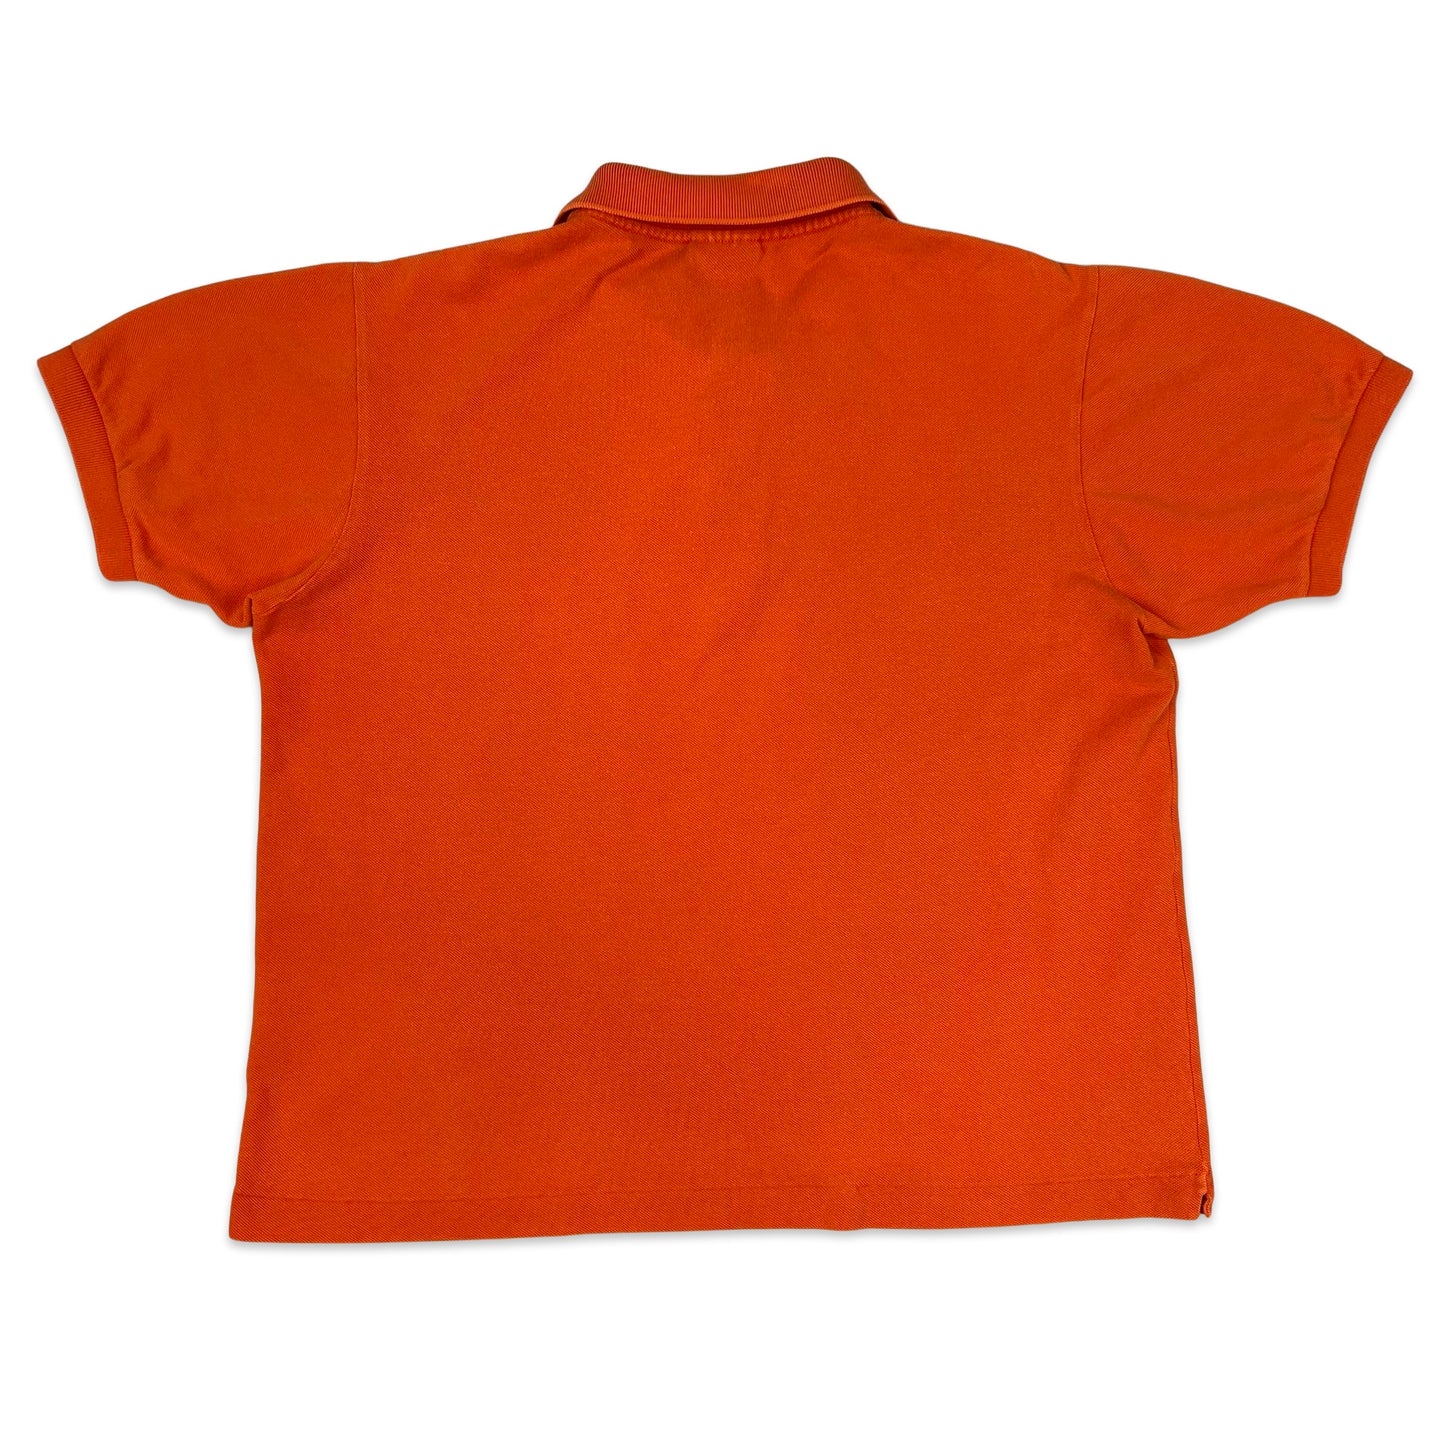 Lacoste Orange Polo Shirt M L